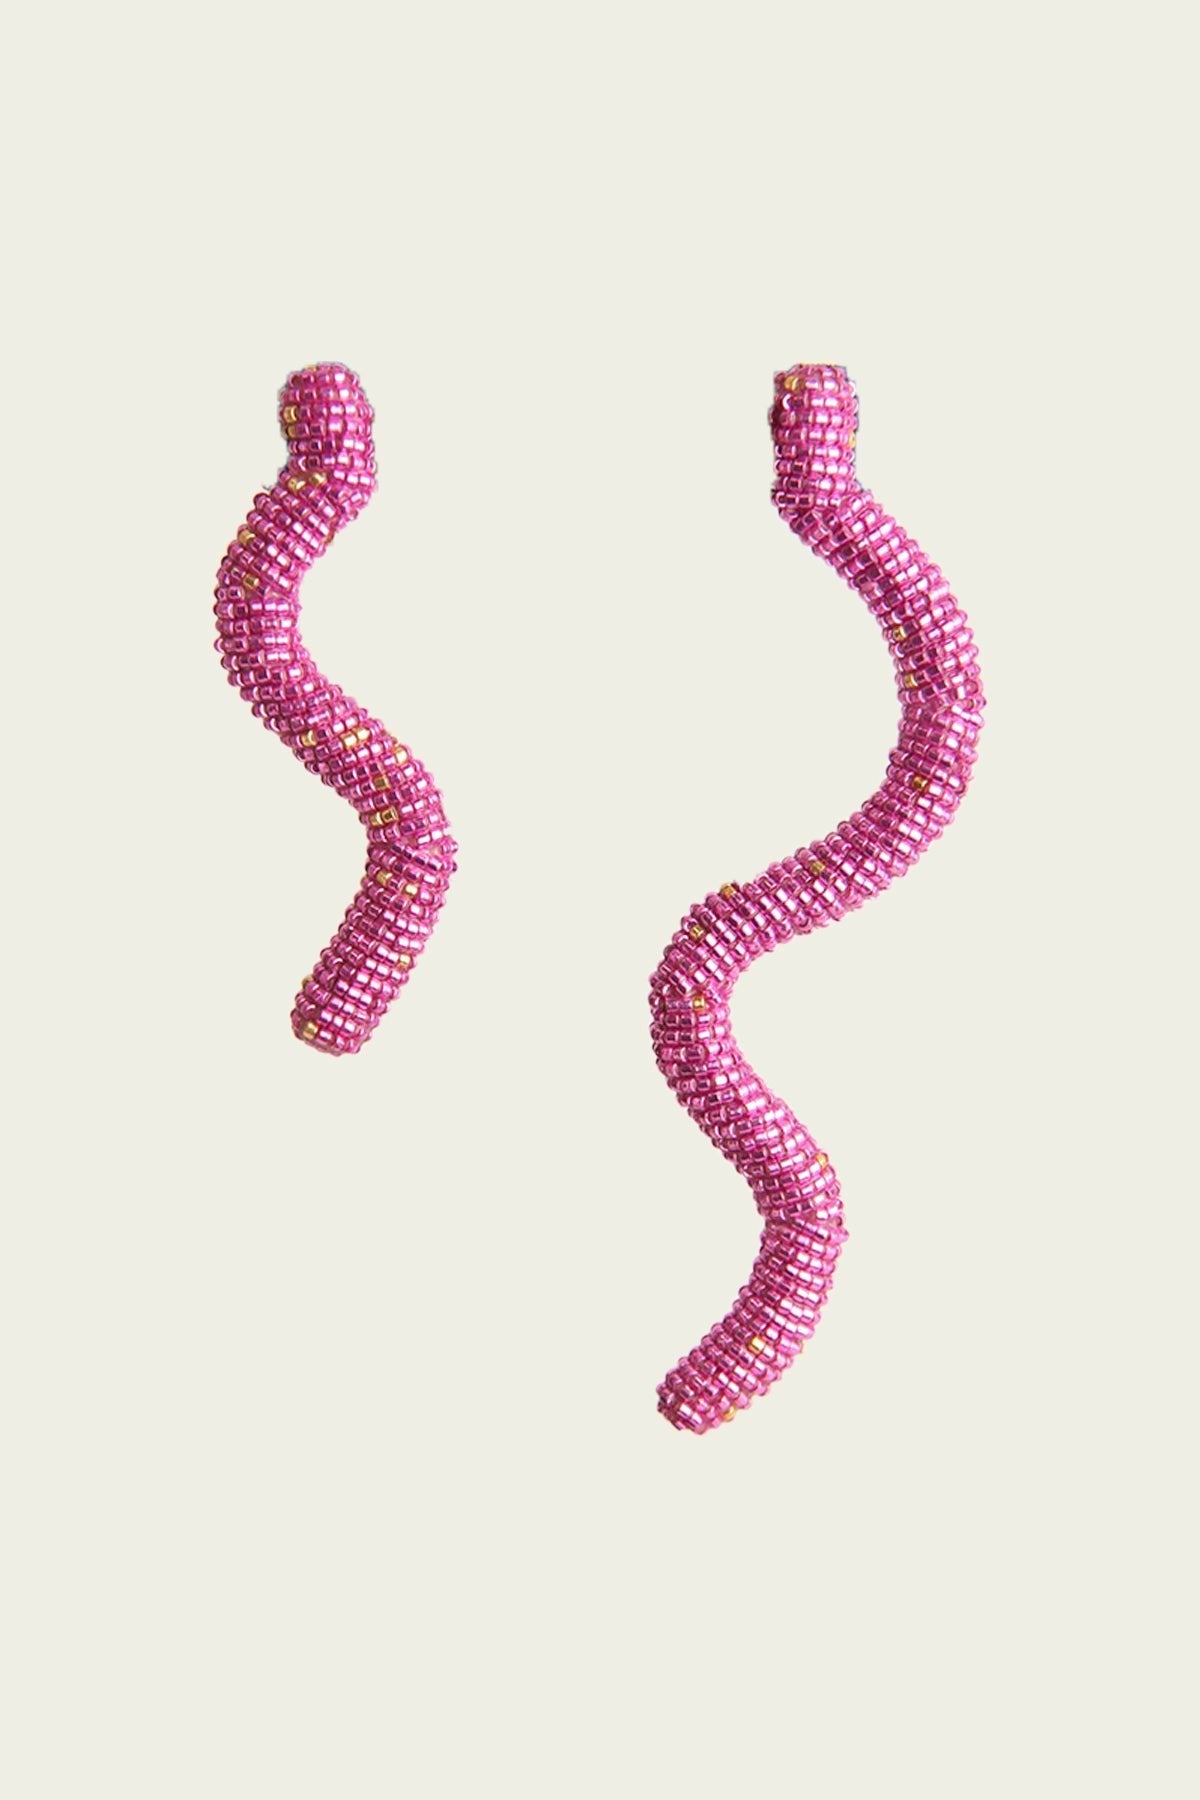 Onna Asymmetric Earrings in Hot Pink - shop-olivia.com